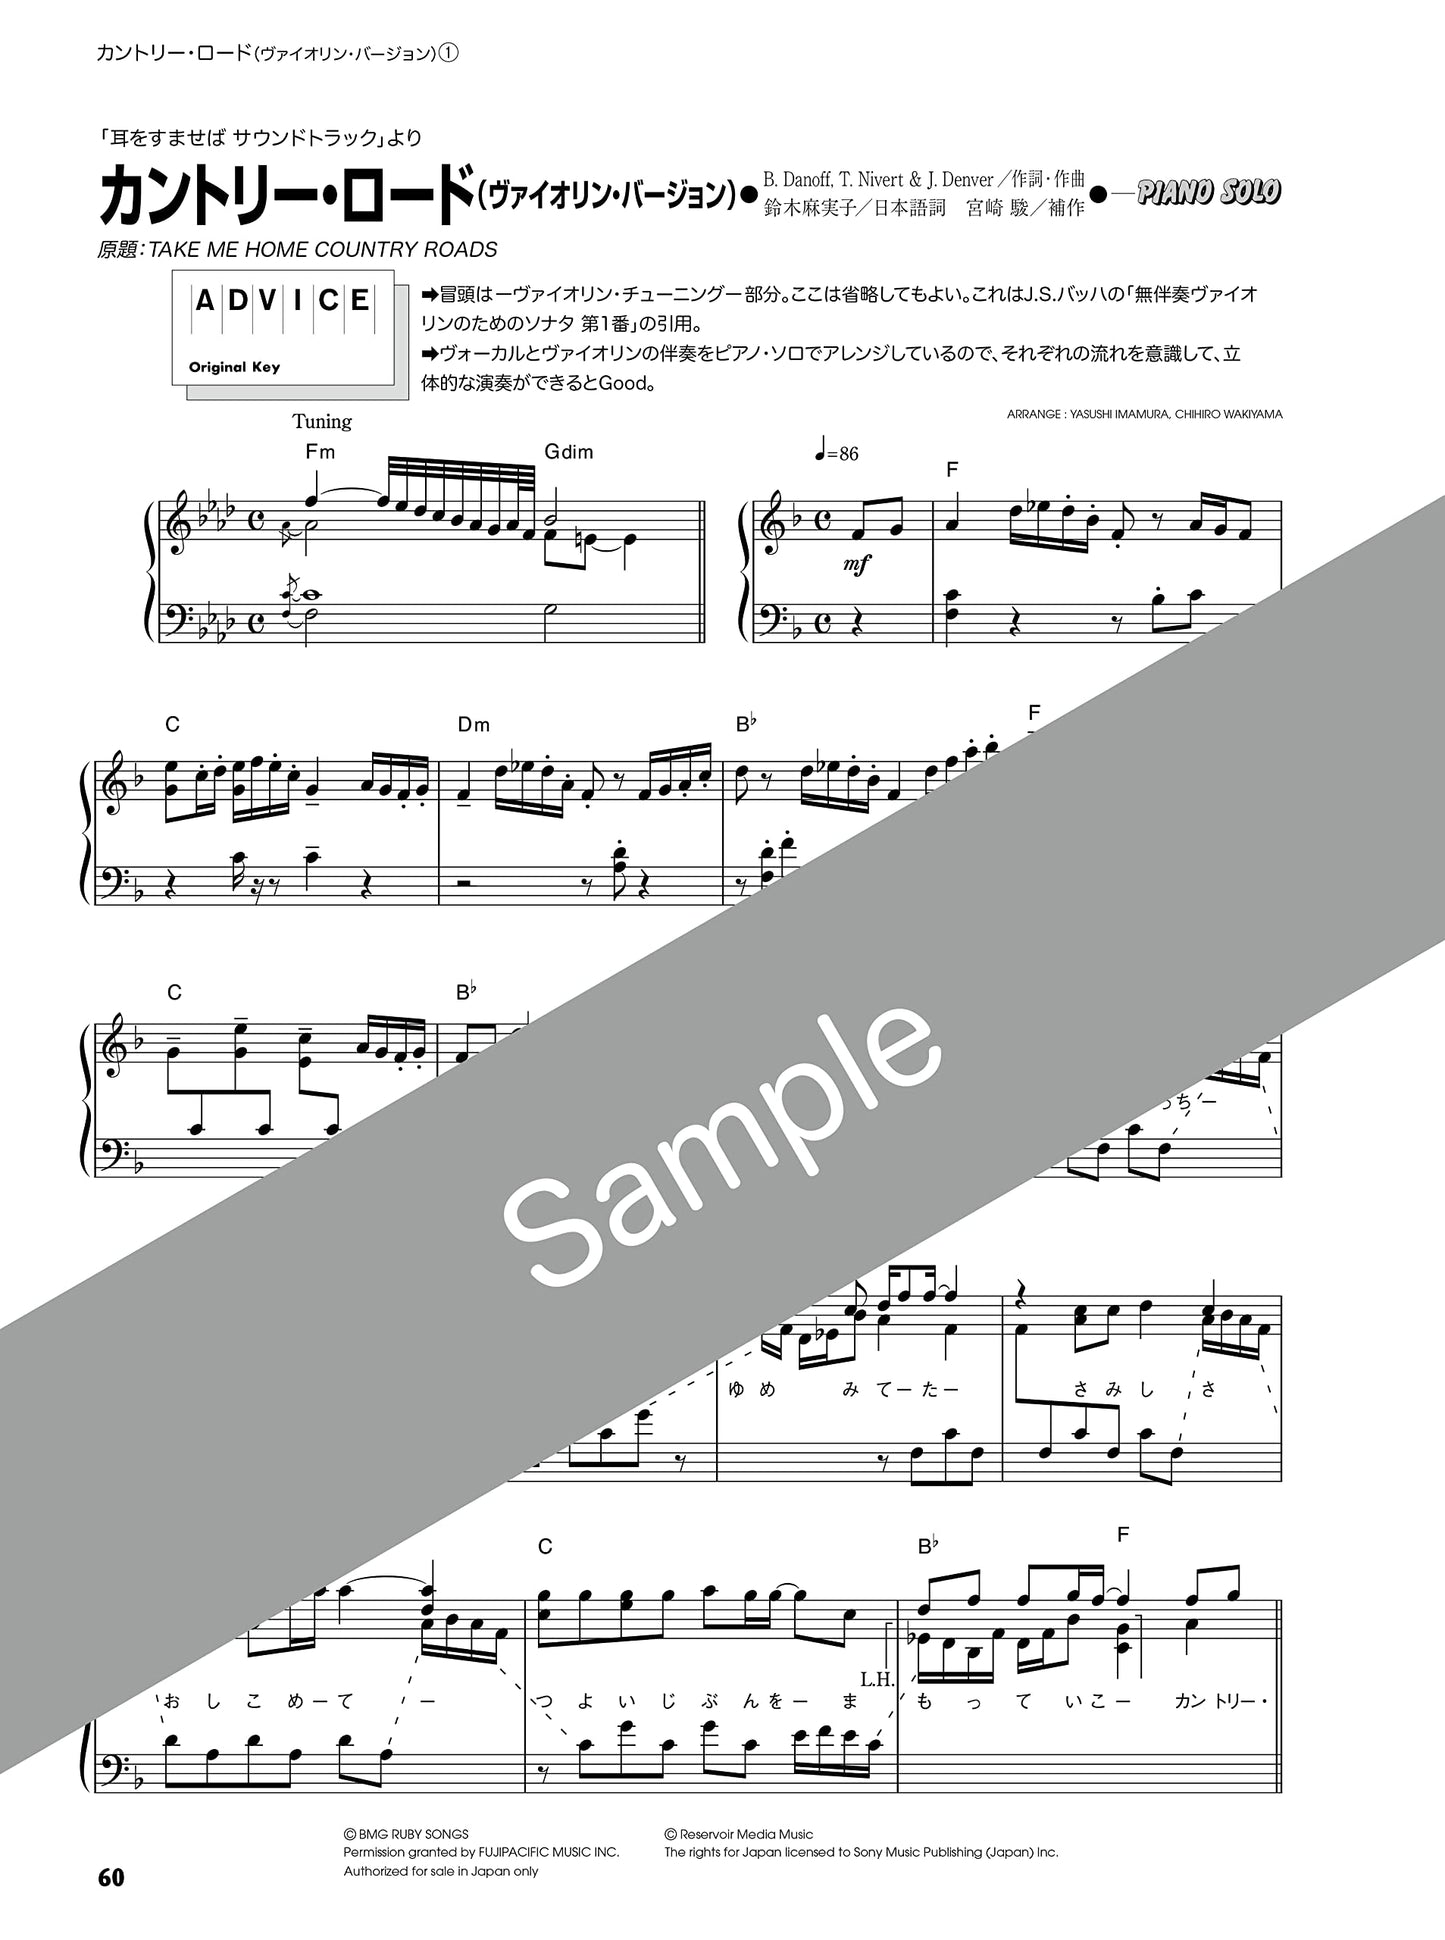 Whisper of the Heart(Studio Ghibli): Piano Solo(Upper-Intermediate) Sheet Music Book